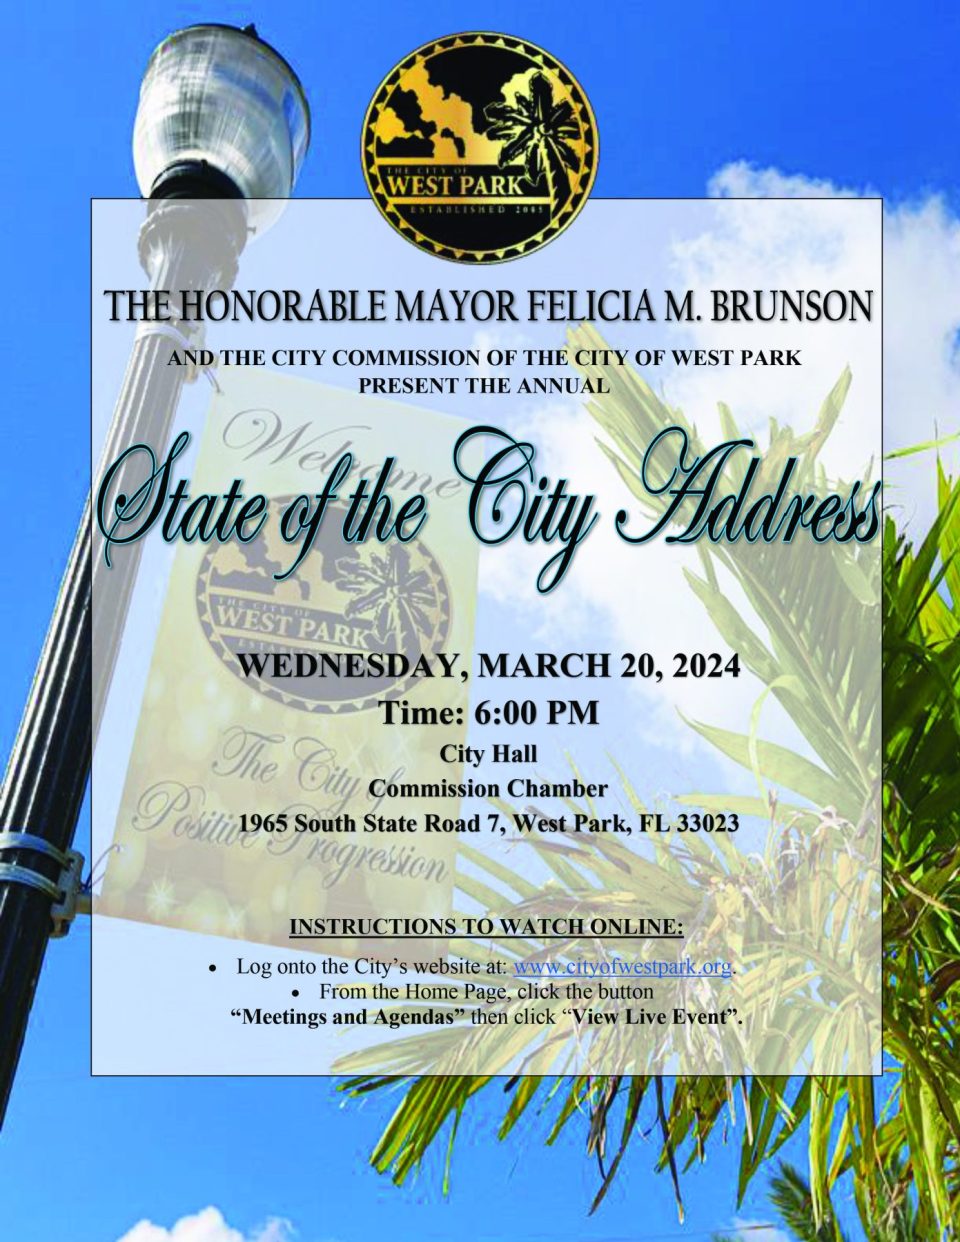 The Hon. Mayor Felicia M. Brunson & The City Commission of West Park